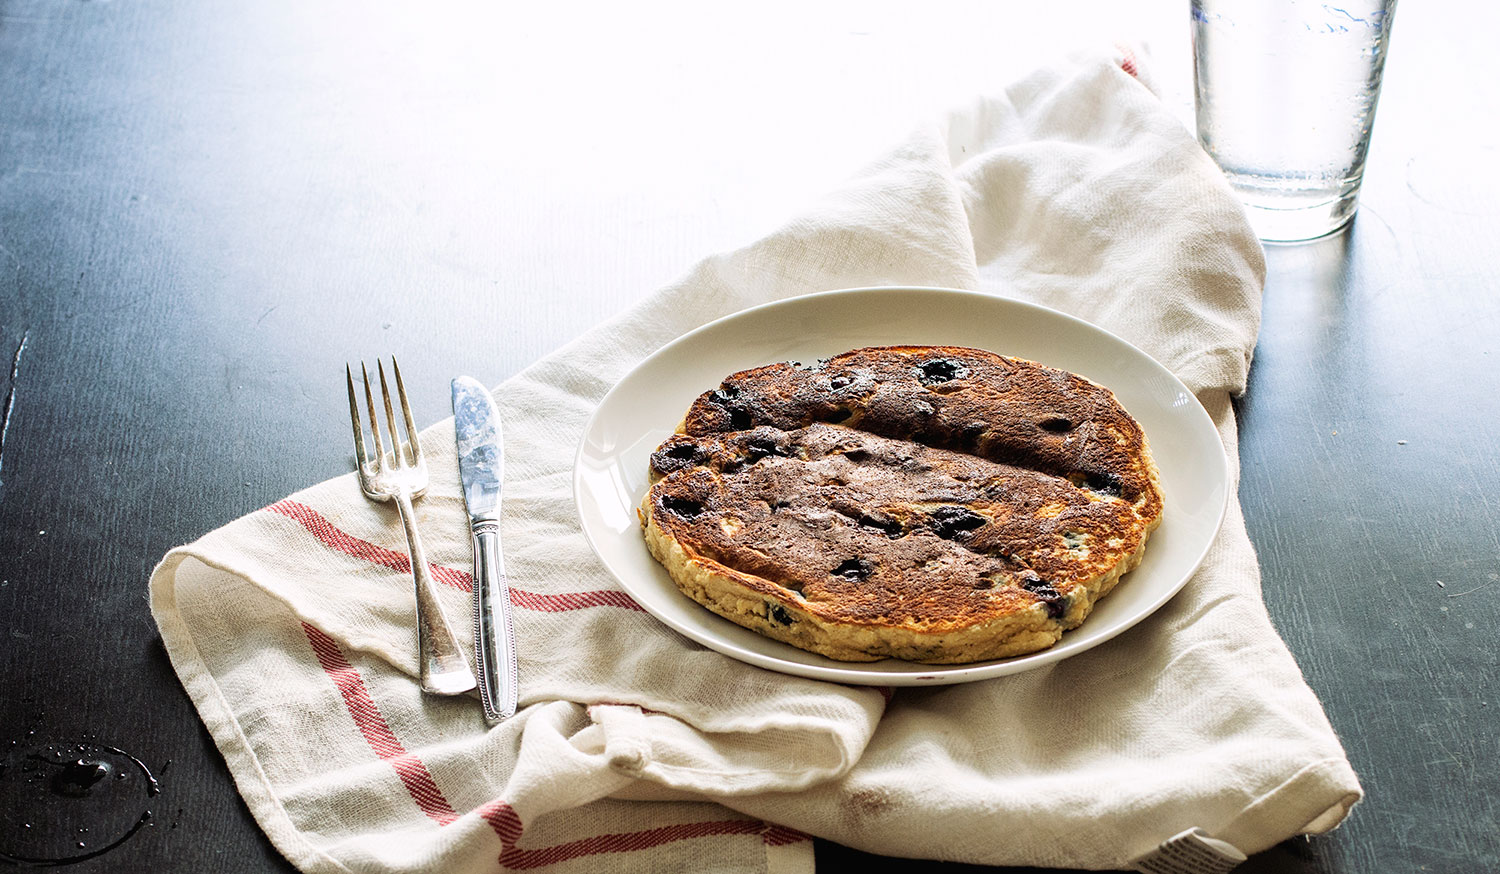 Blueberry coconut flour pancakes // The Pancake Princess